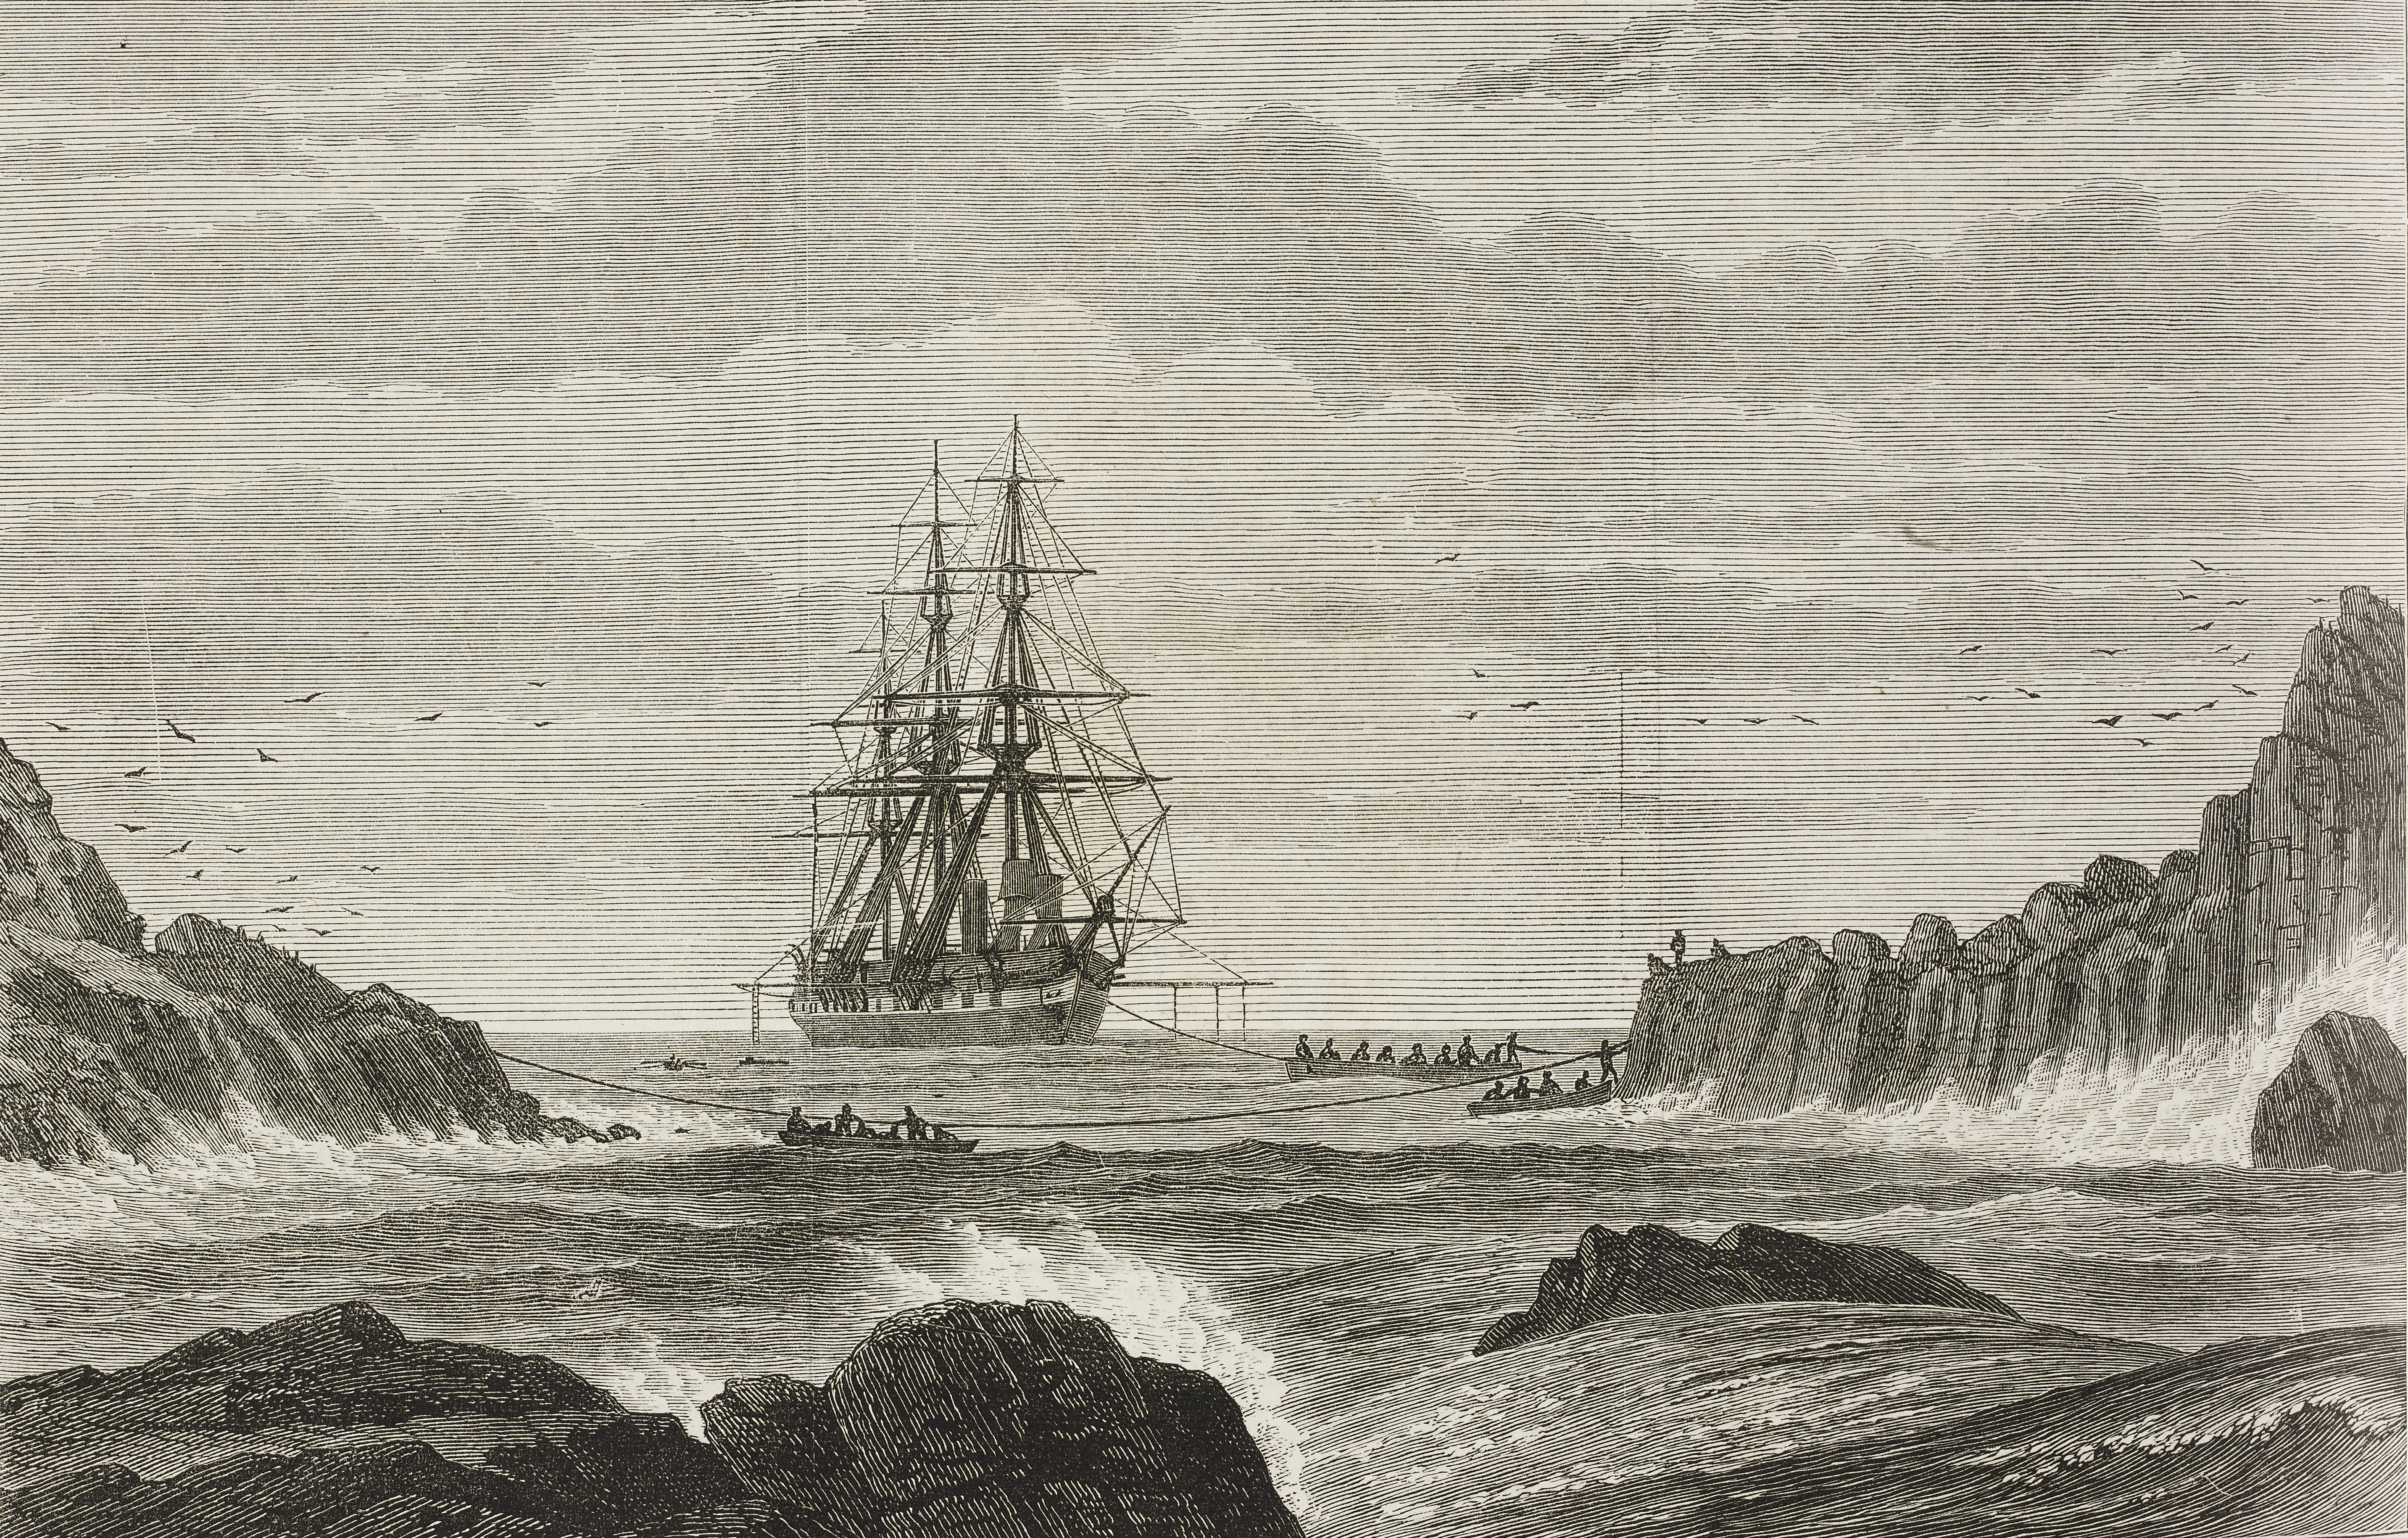 Voyage of HMS Challenger, Atlantic Ocean